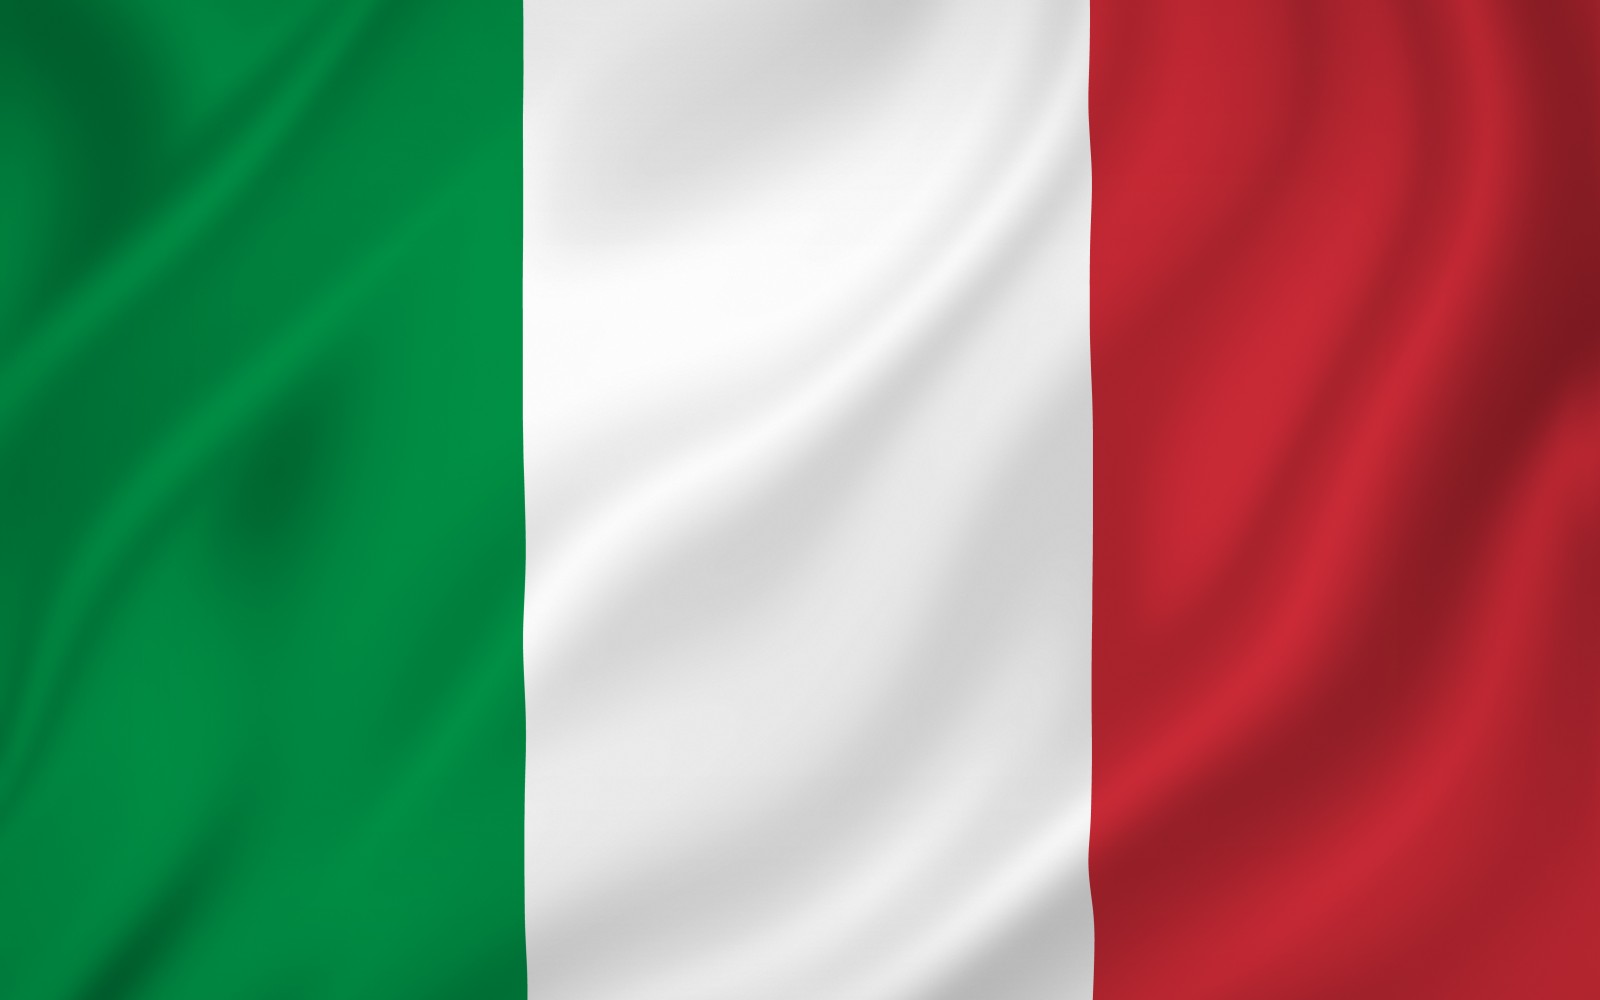 Italian presence in Poland